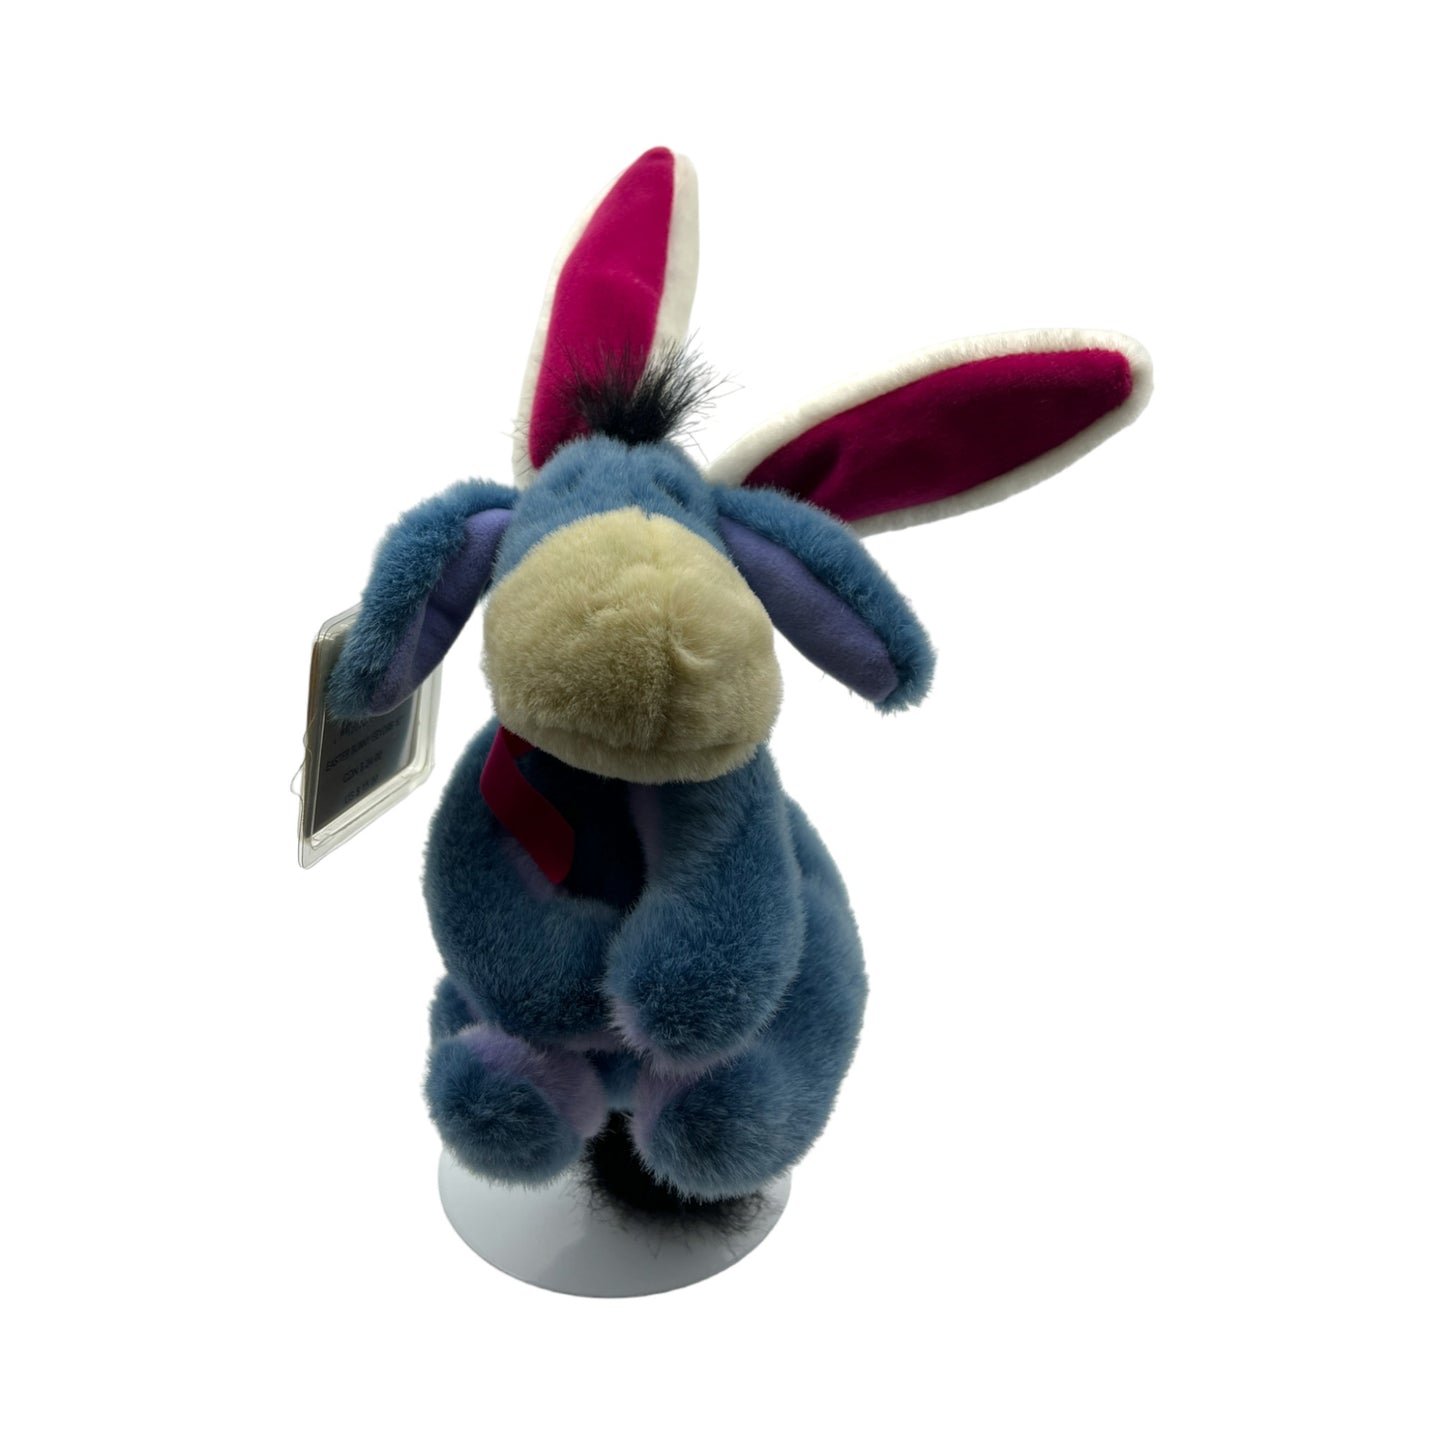 Disney Store - Easter Bunny Eeyore - Vintage - 10"